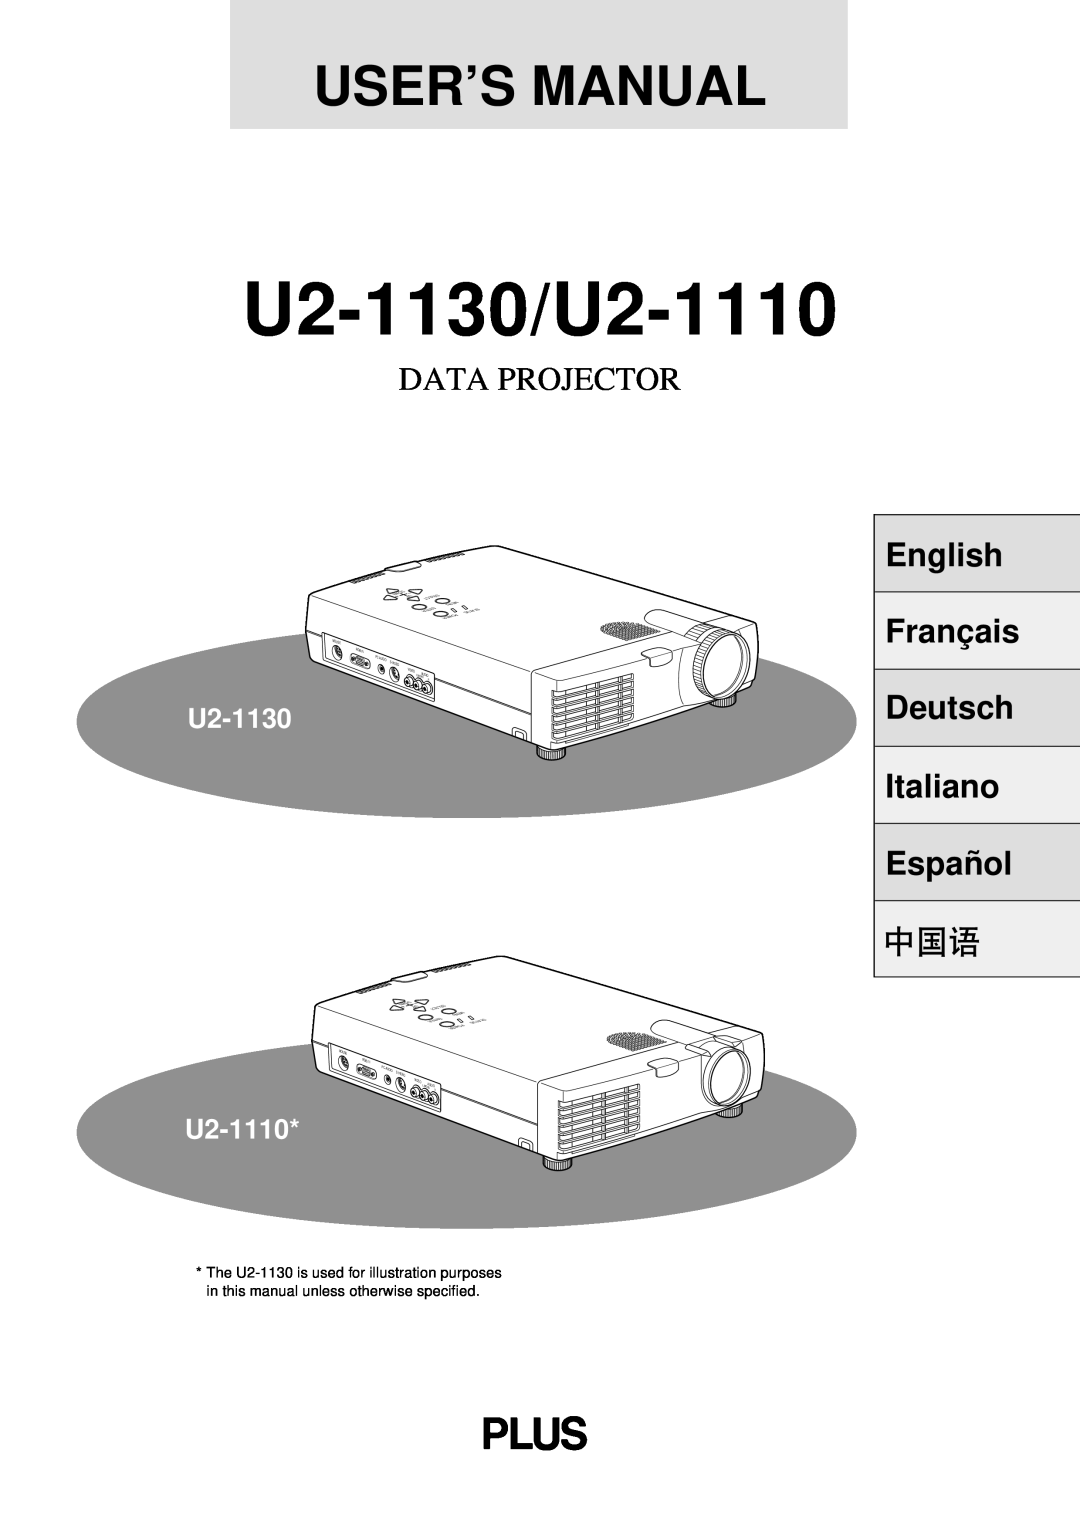 PLUS Vision U2-1130/U2-1110 user manual User’S Manual, English Français Deutsch Italiano Español, Data Projector, Mouse 